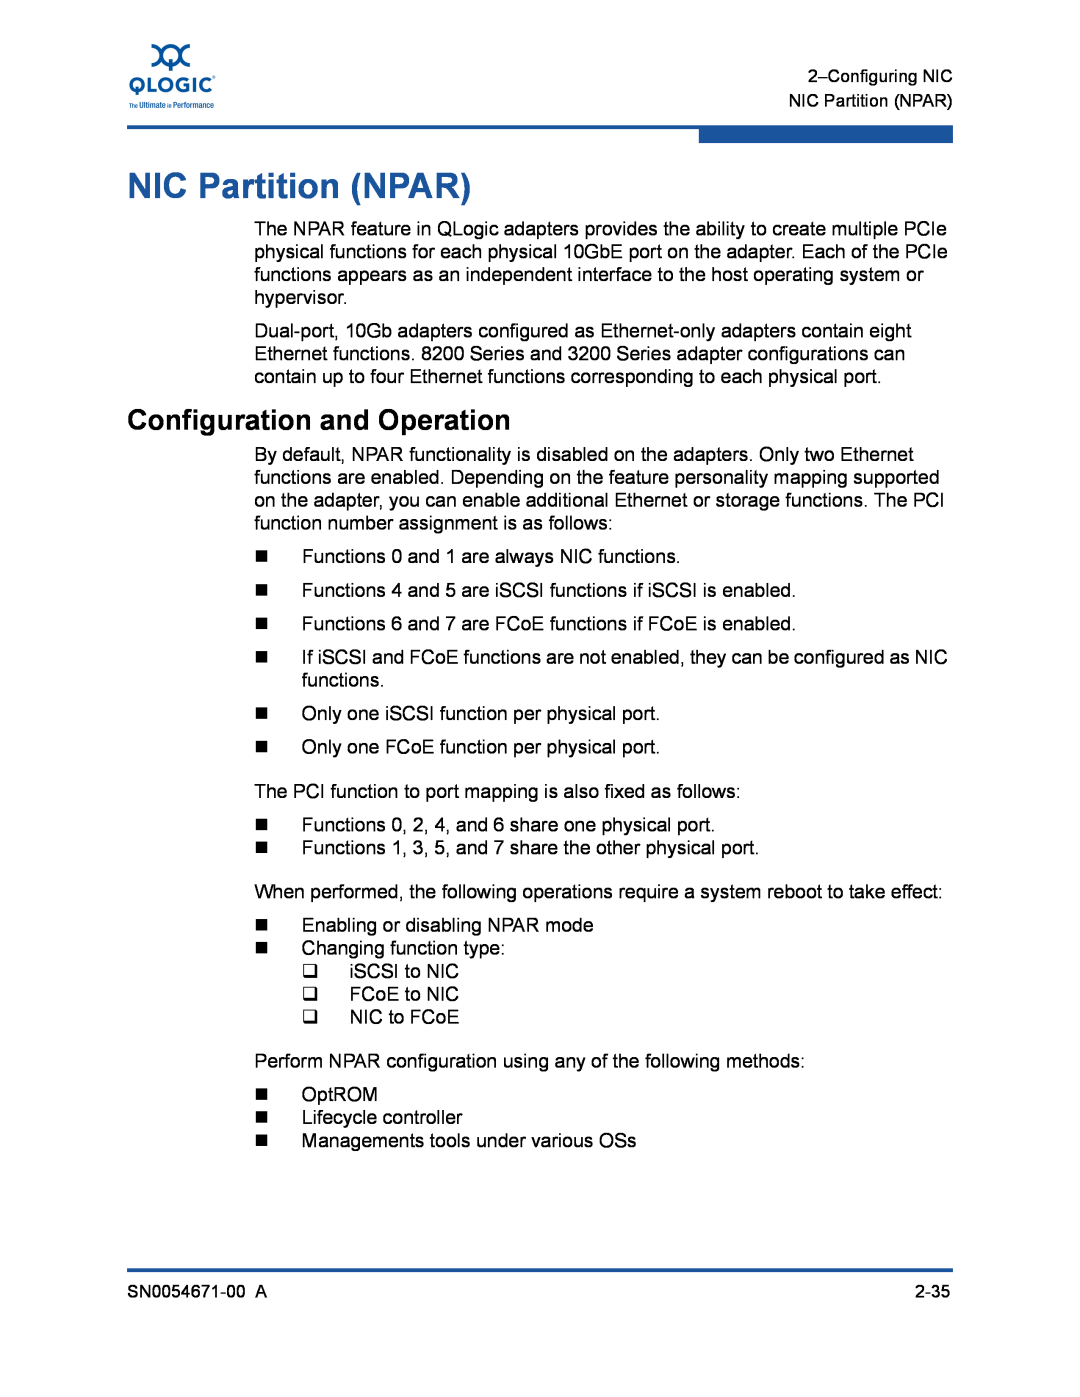 Q-Logic 3200, 8200 manual NIC Partition NPAR, Configuration and Operation 